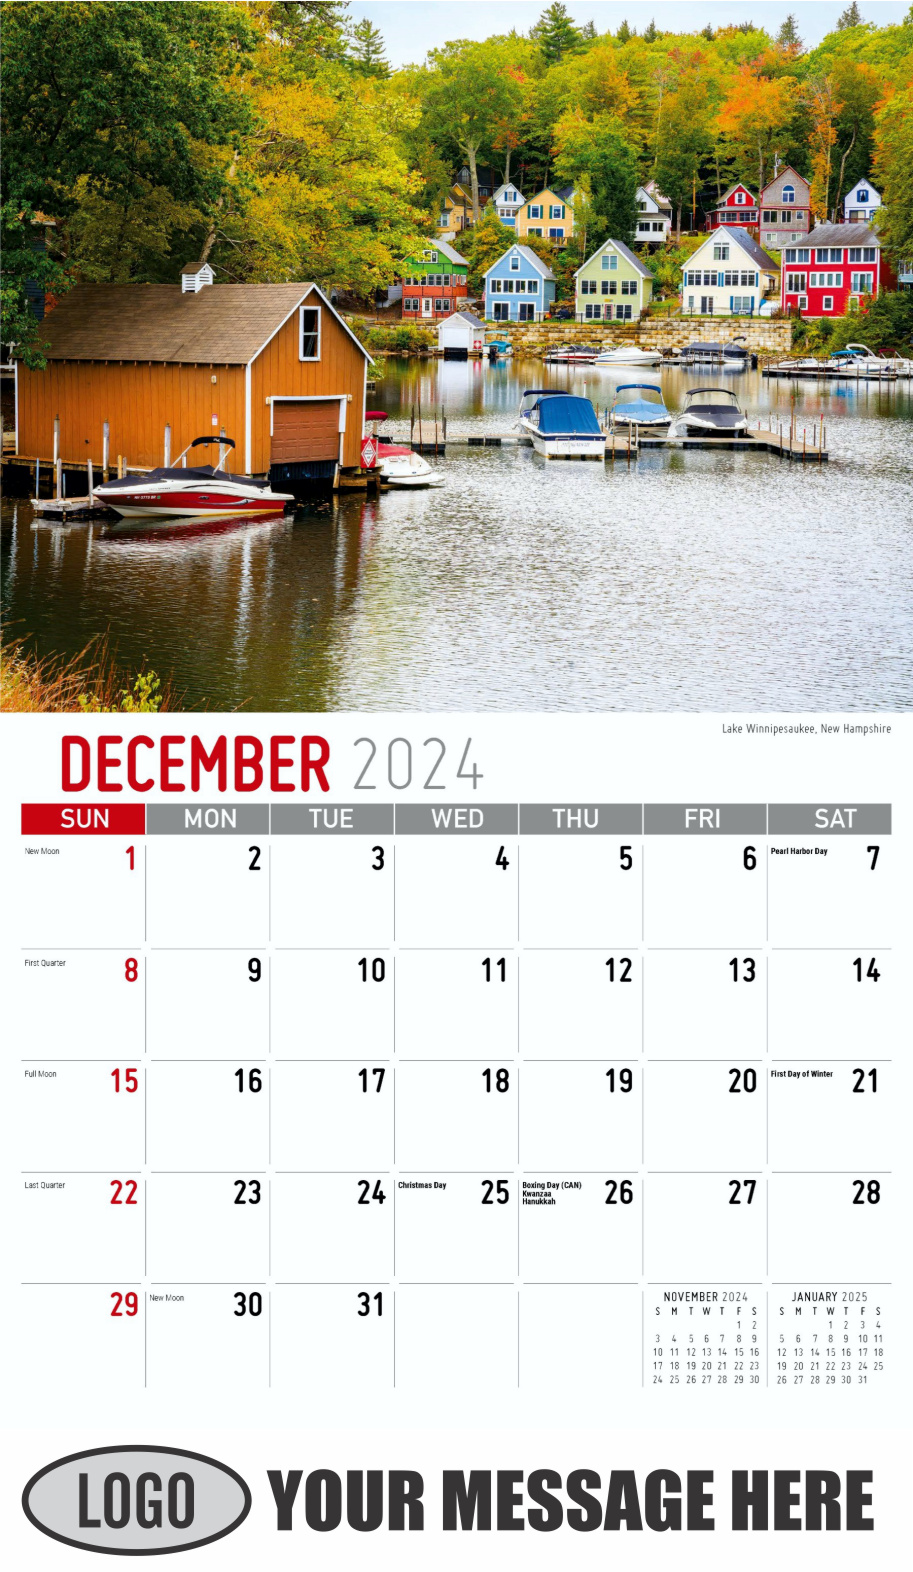 Scenes of America 2024 Business Advertising Wall Calendar - December